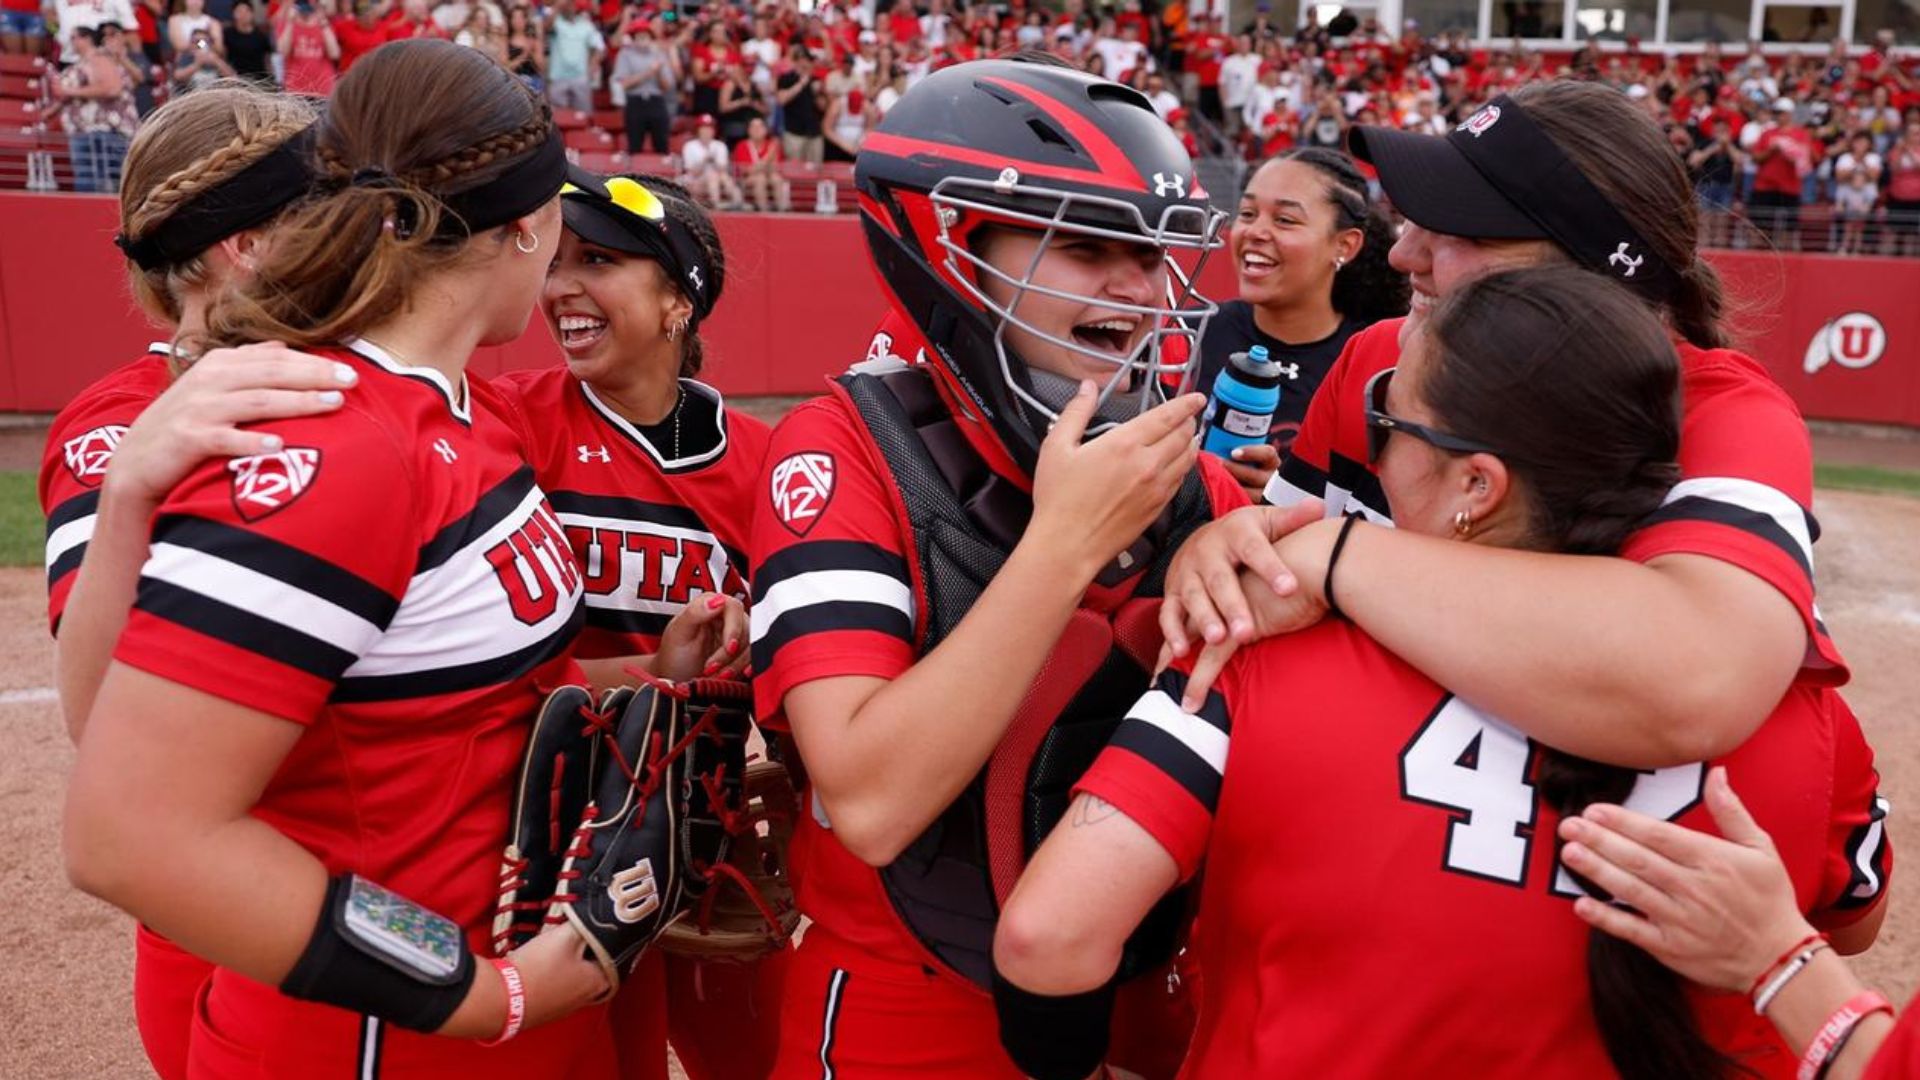 Utah extends historic softball season, will host first NCAA Super